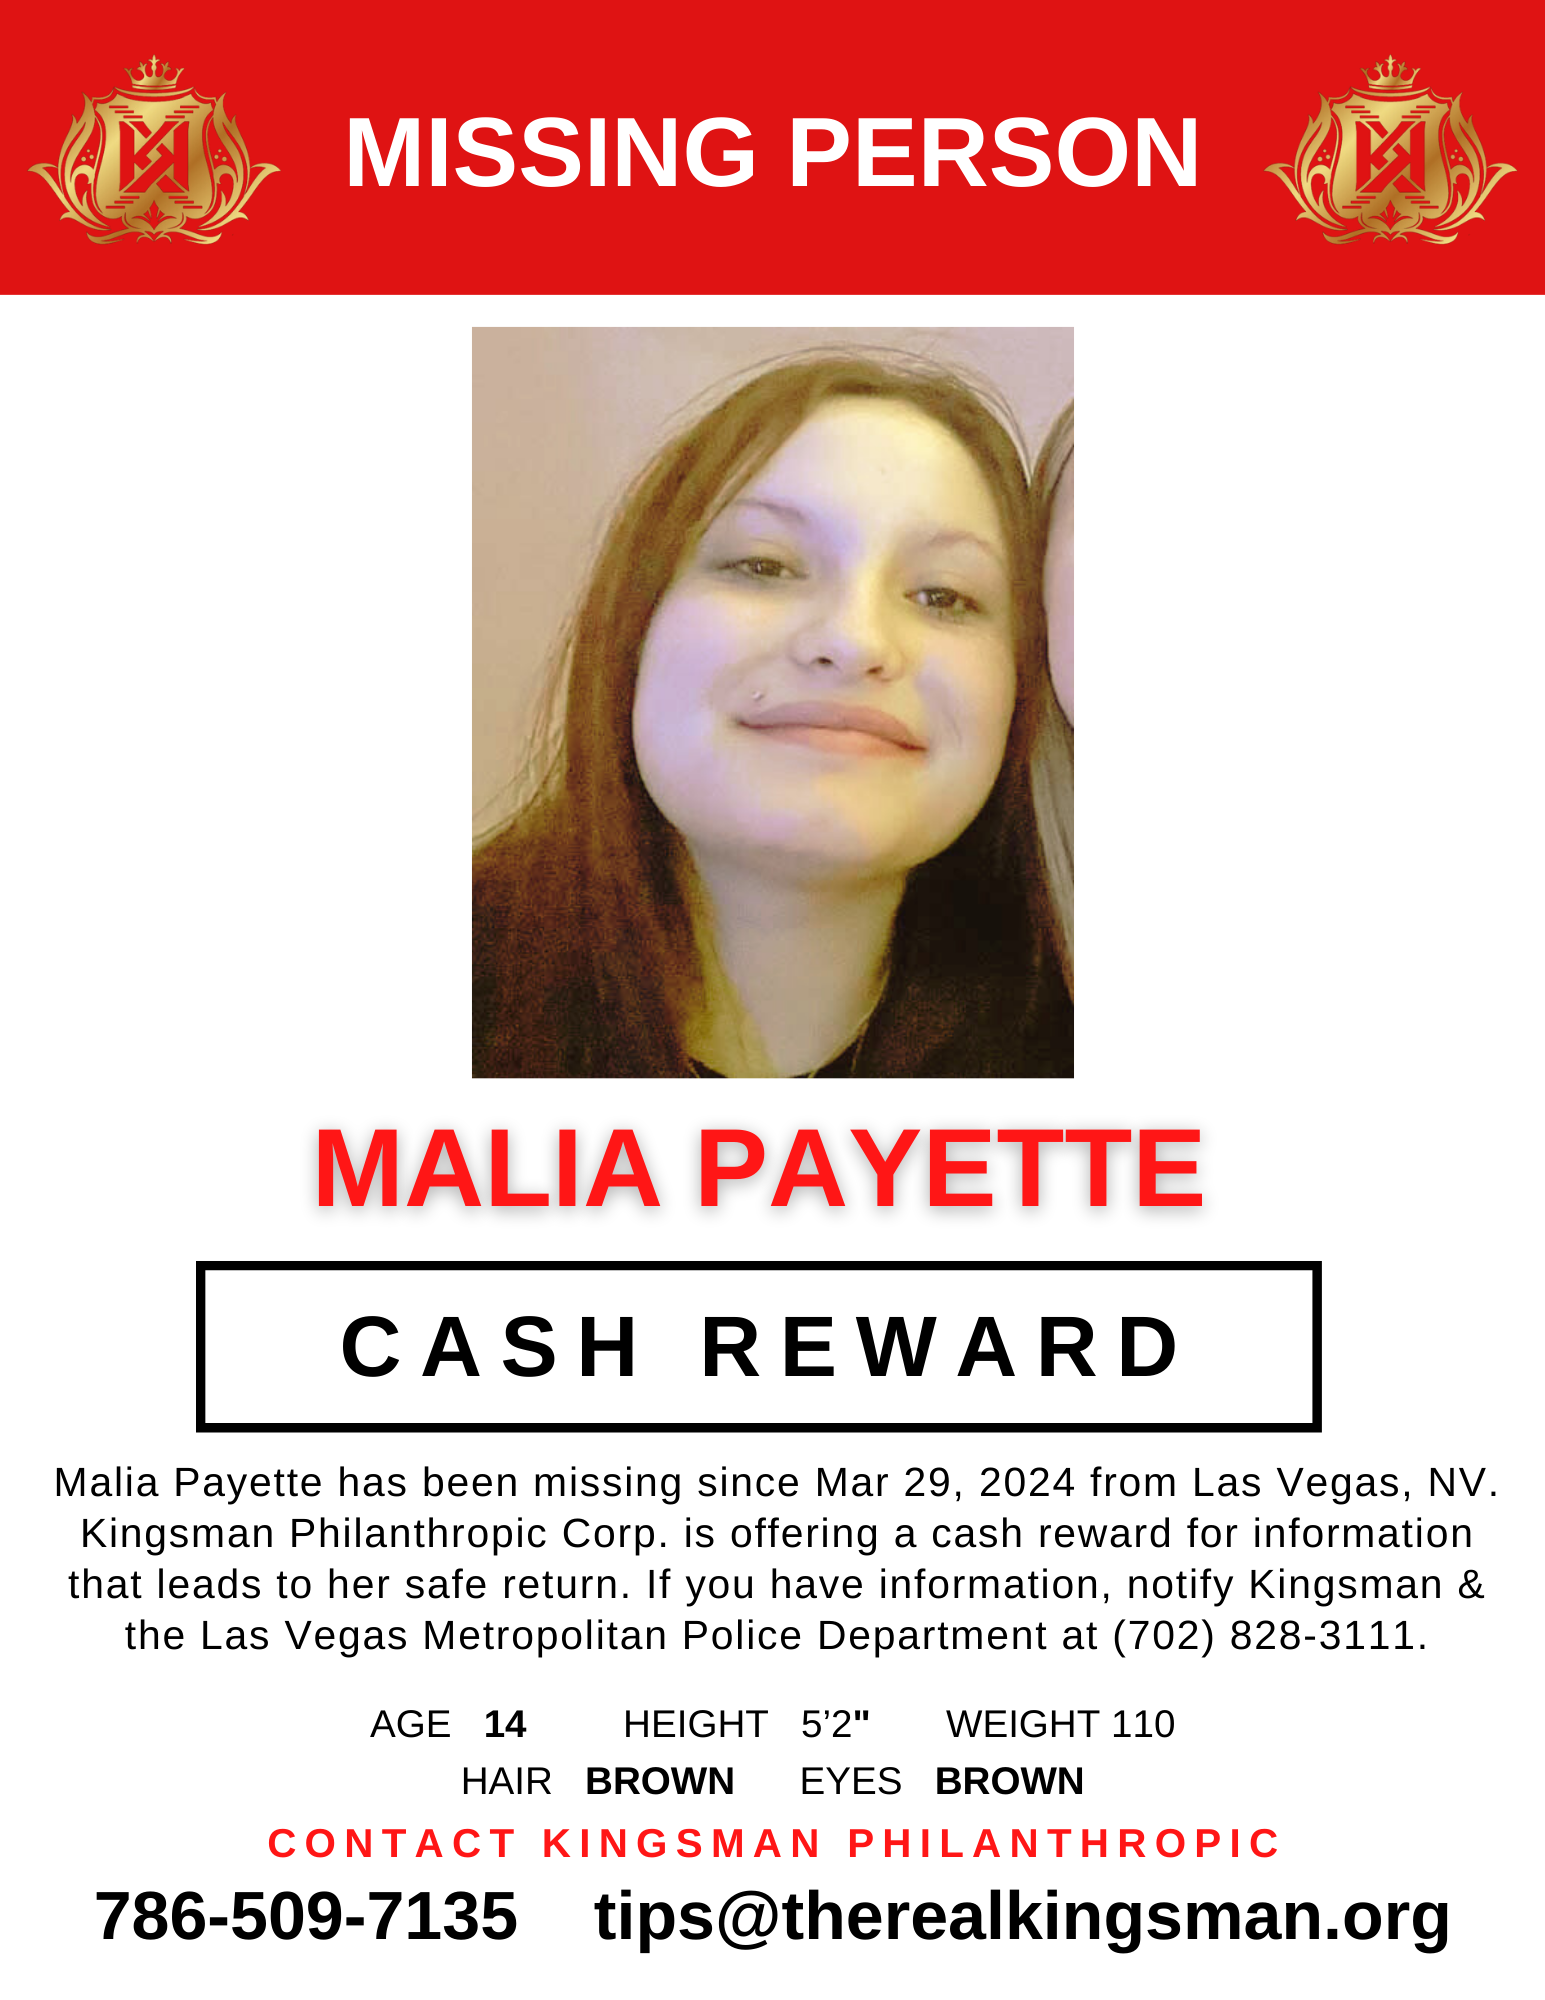 Kingsman Offers Cash Reward for Information on Missing Malia Payette